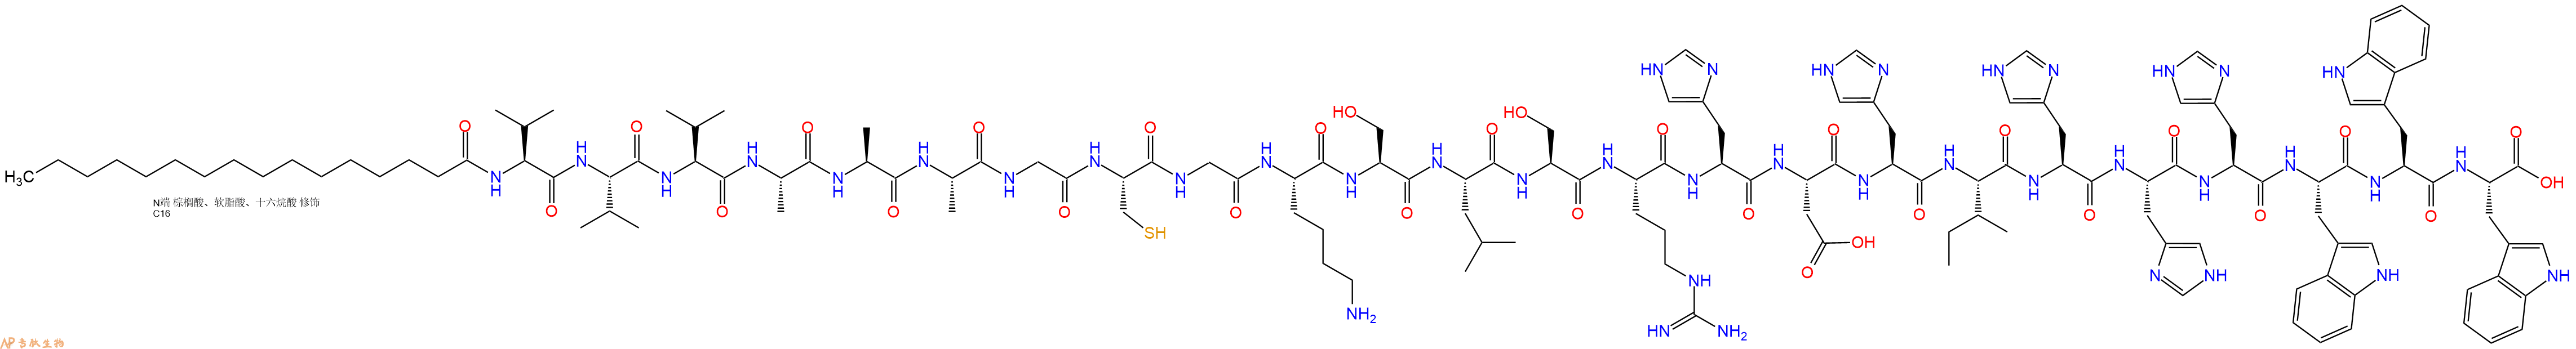 专肽生物产品棕榈酸-VVVAAAGCGKSLSRHDHIHHHWWW